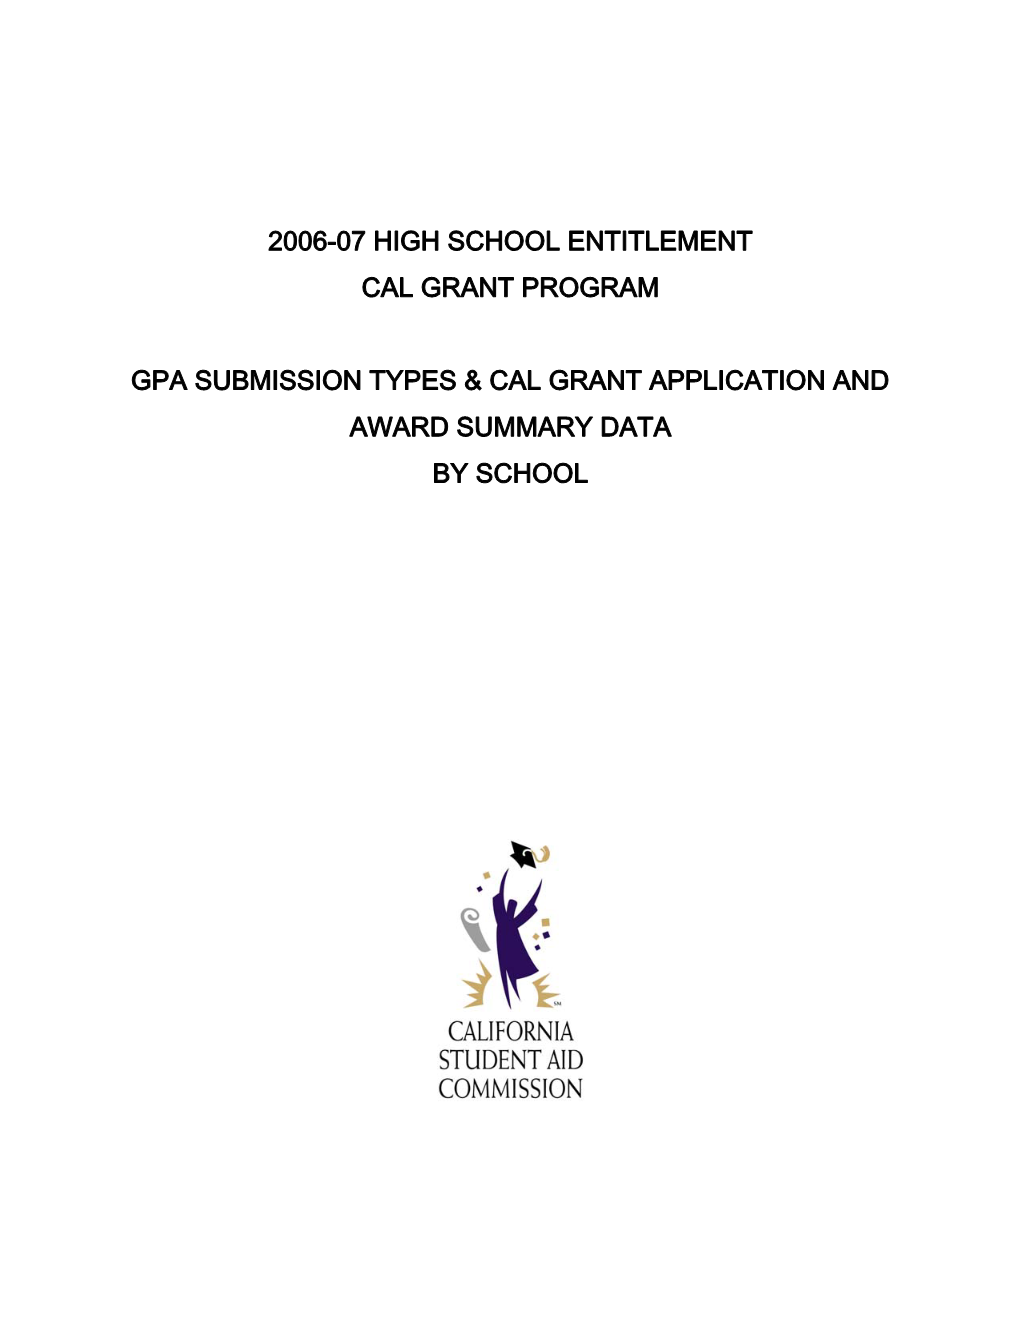 2006-07 High School Entitlement Cal Grant Program